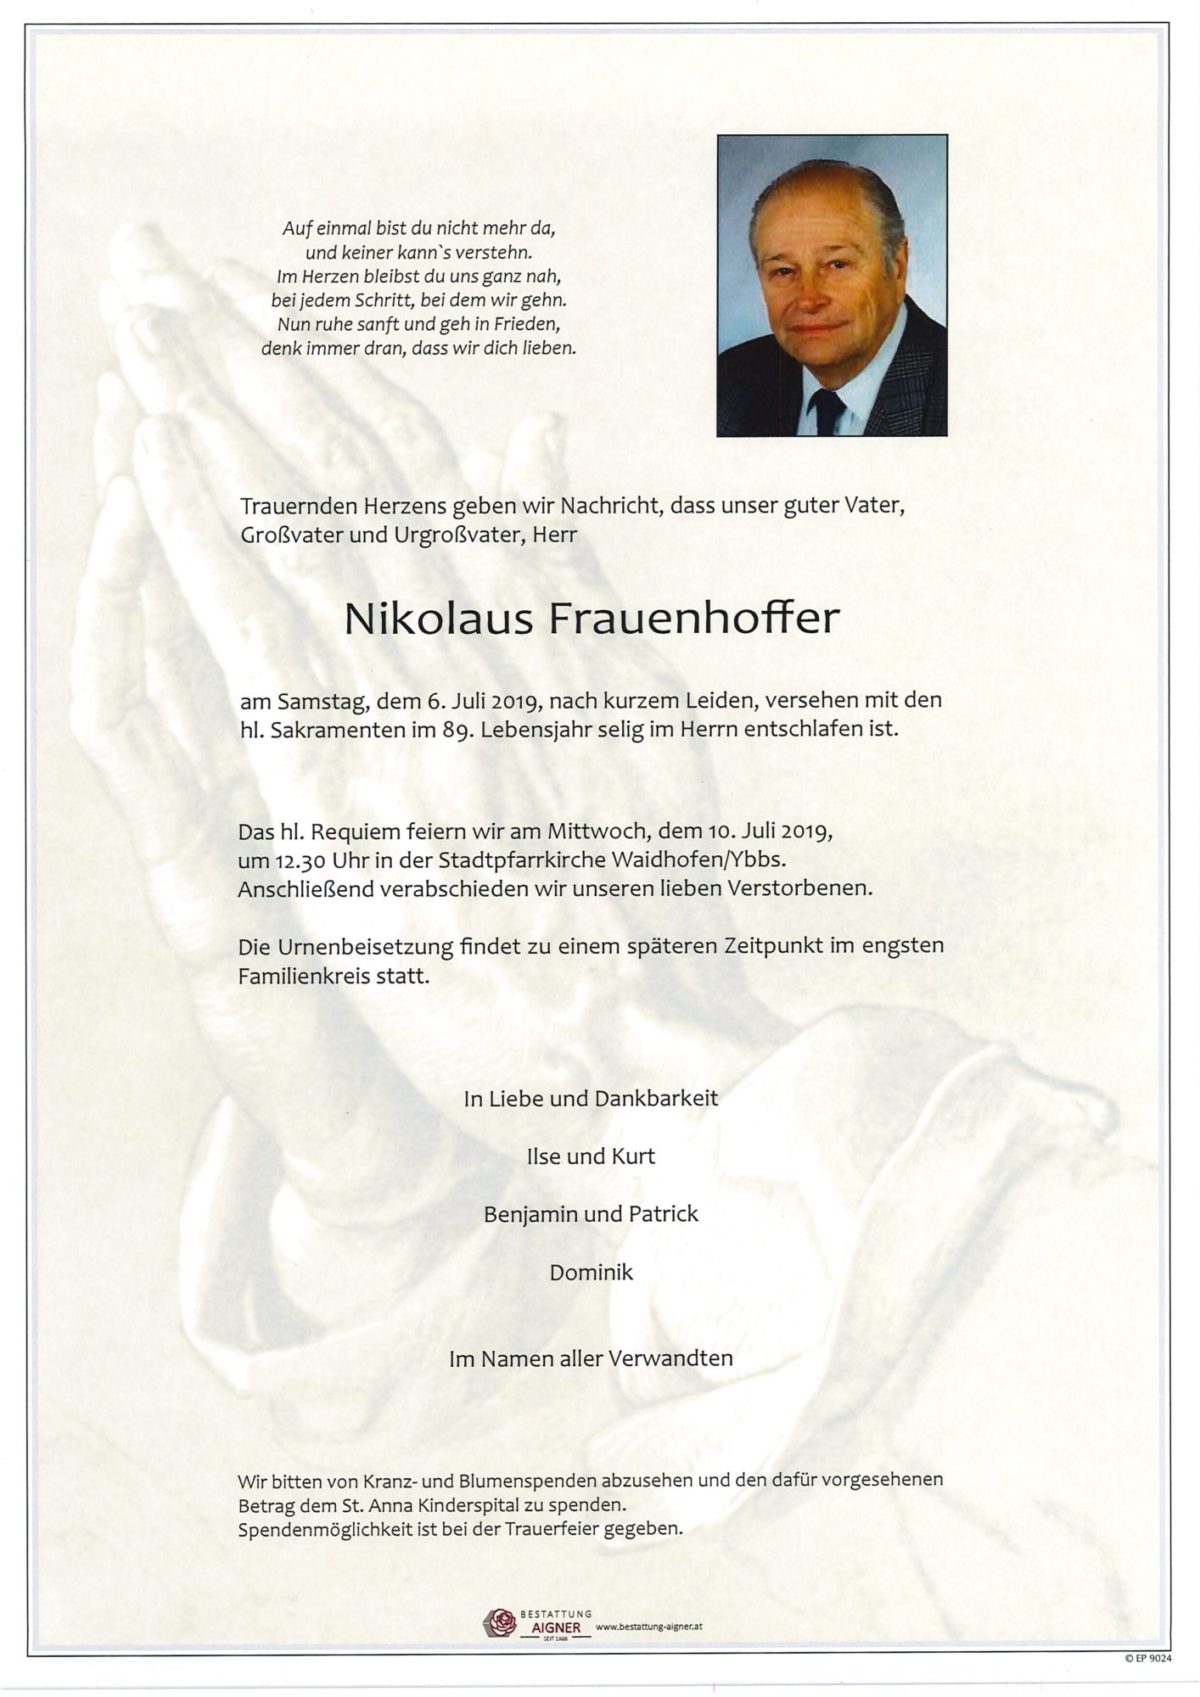 Nikolaus Frauenhoffer